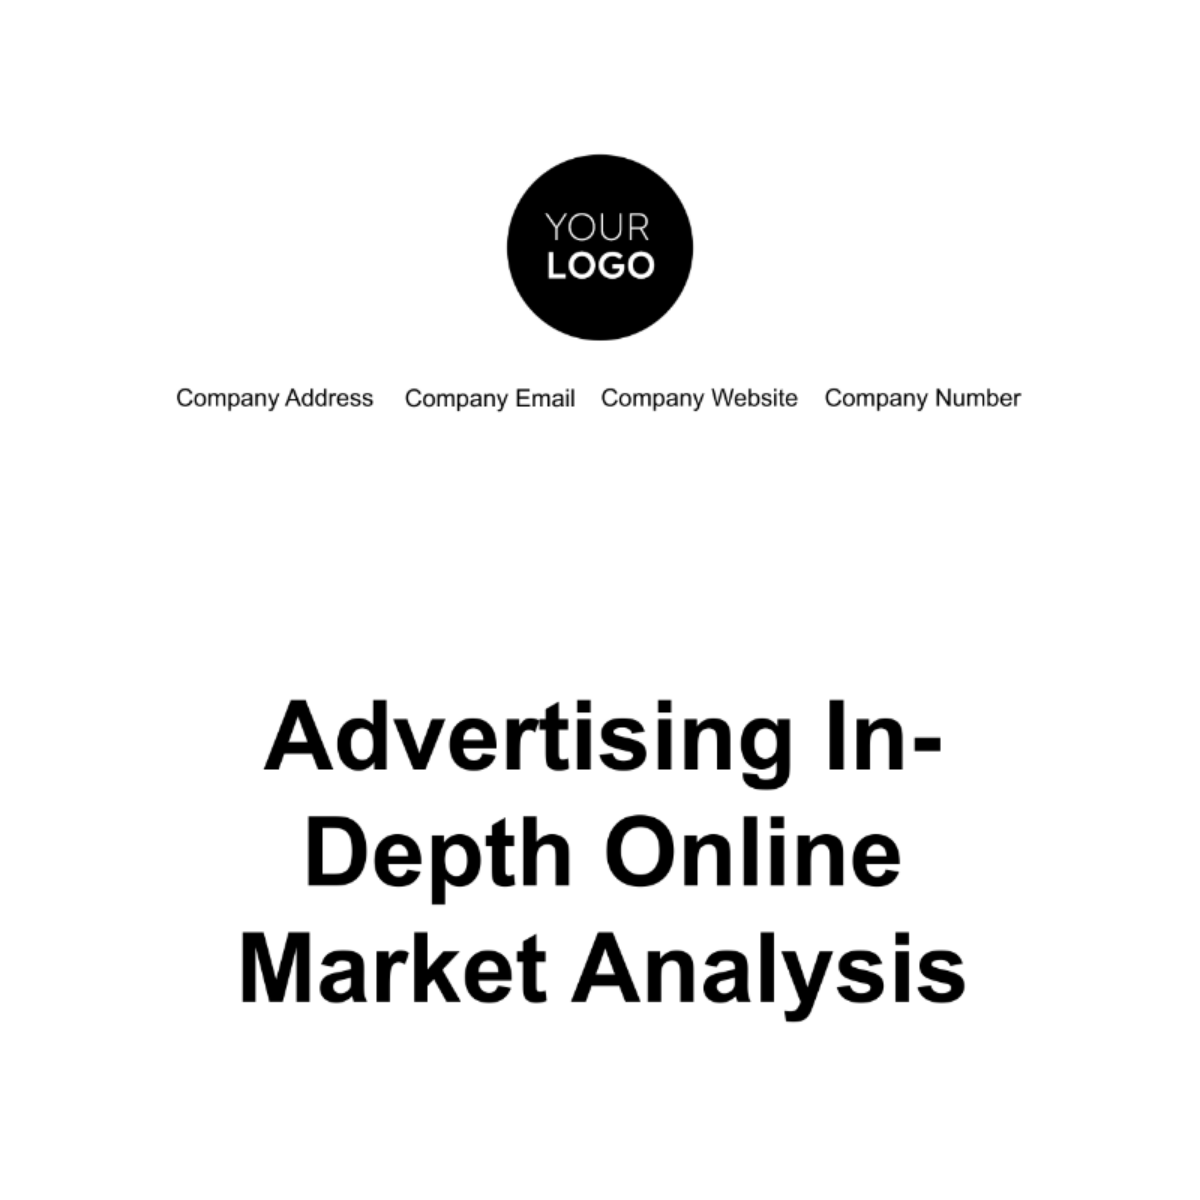 Advertising In-depth Online Market Analysis Template